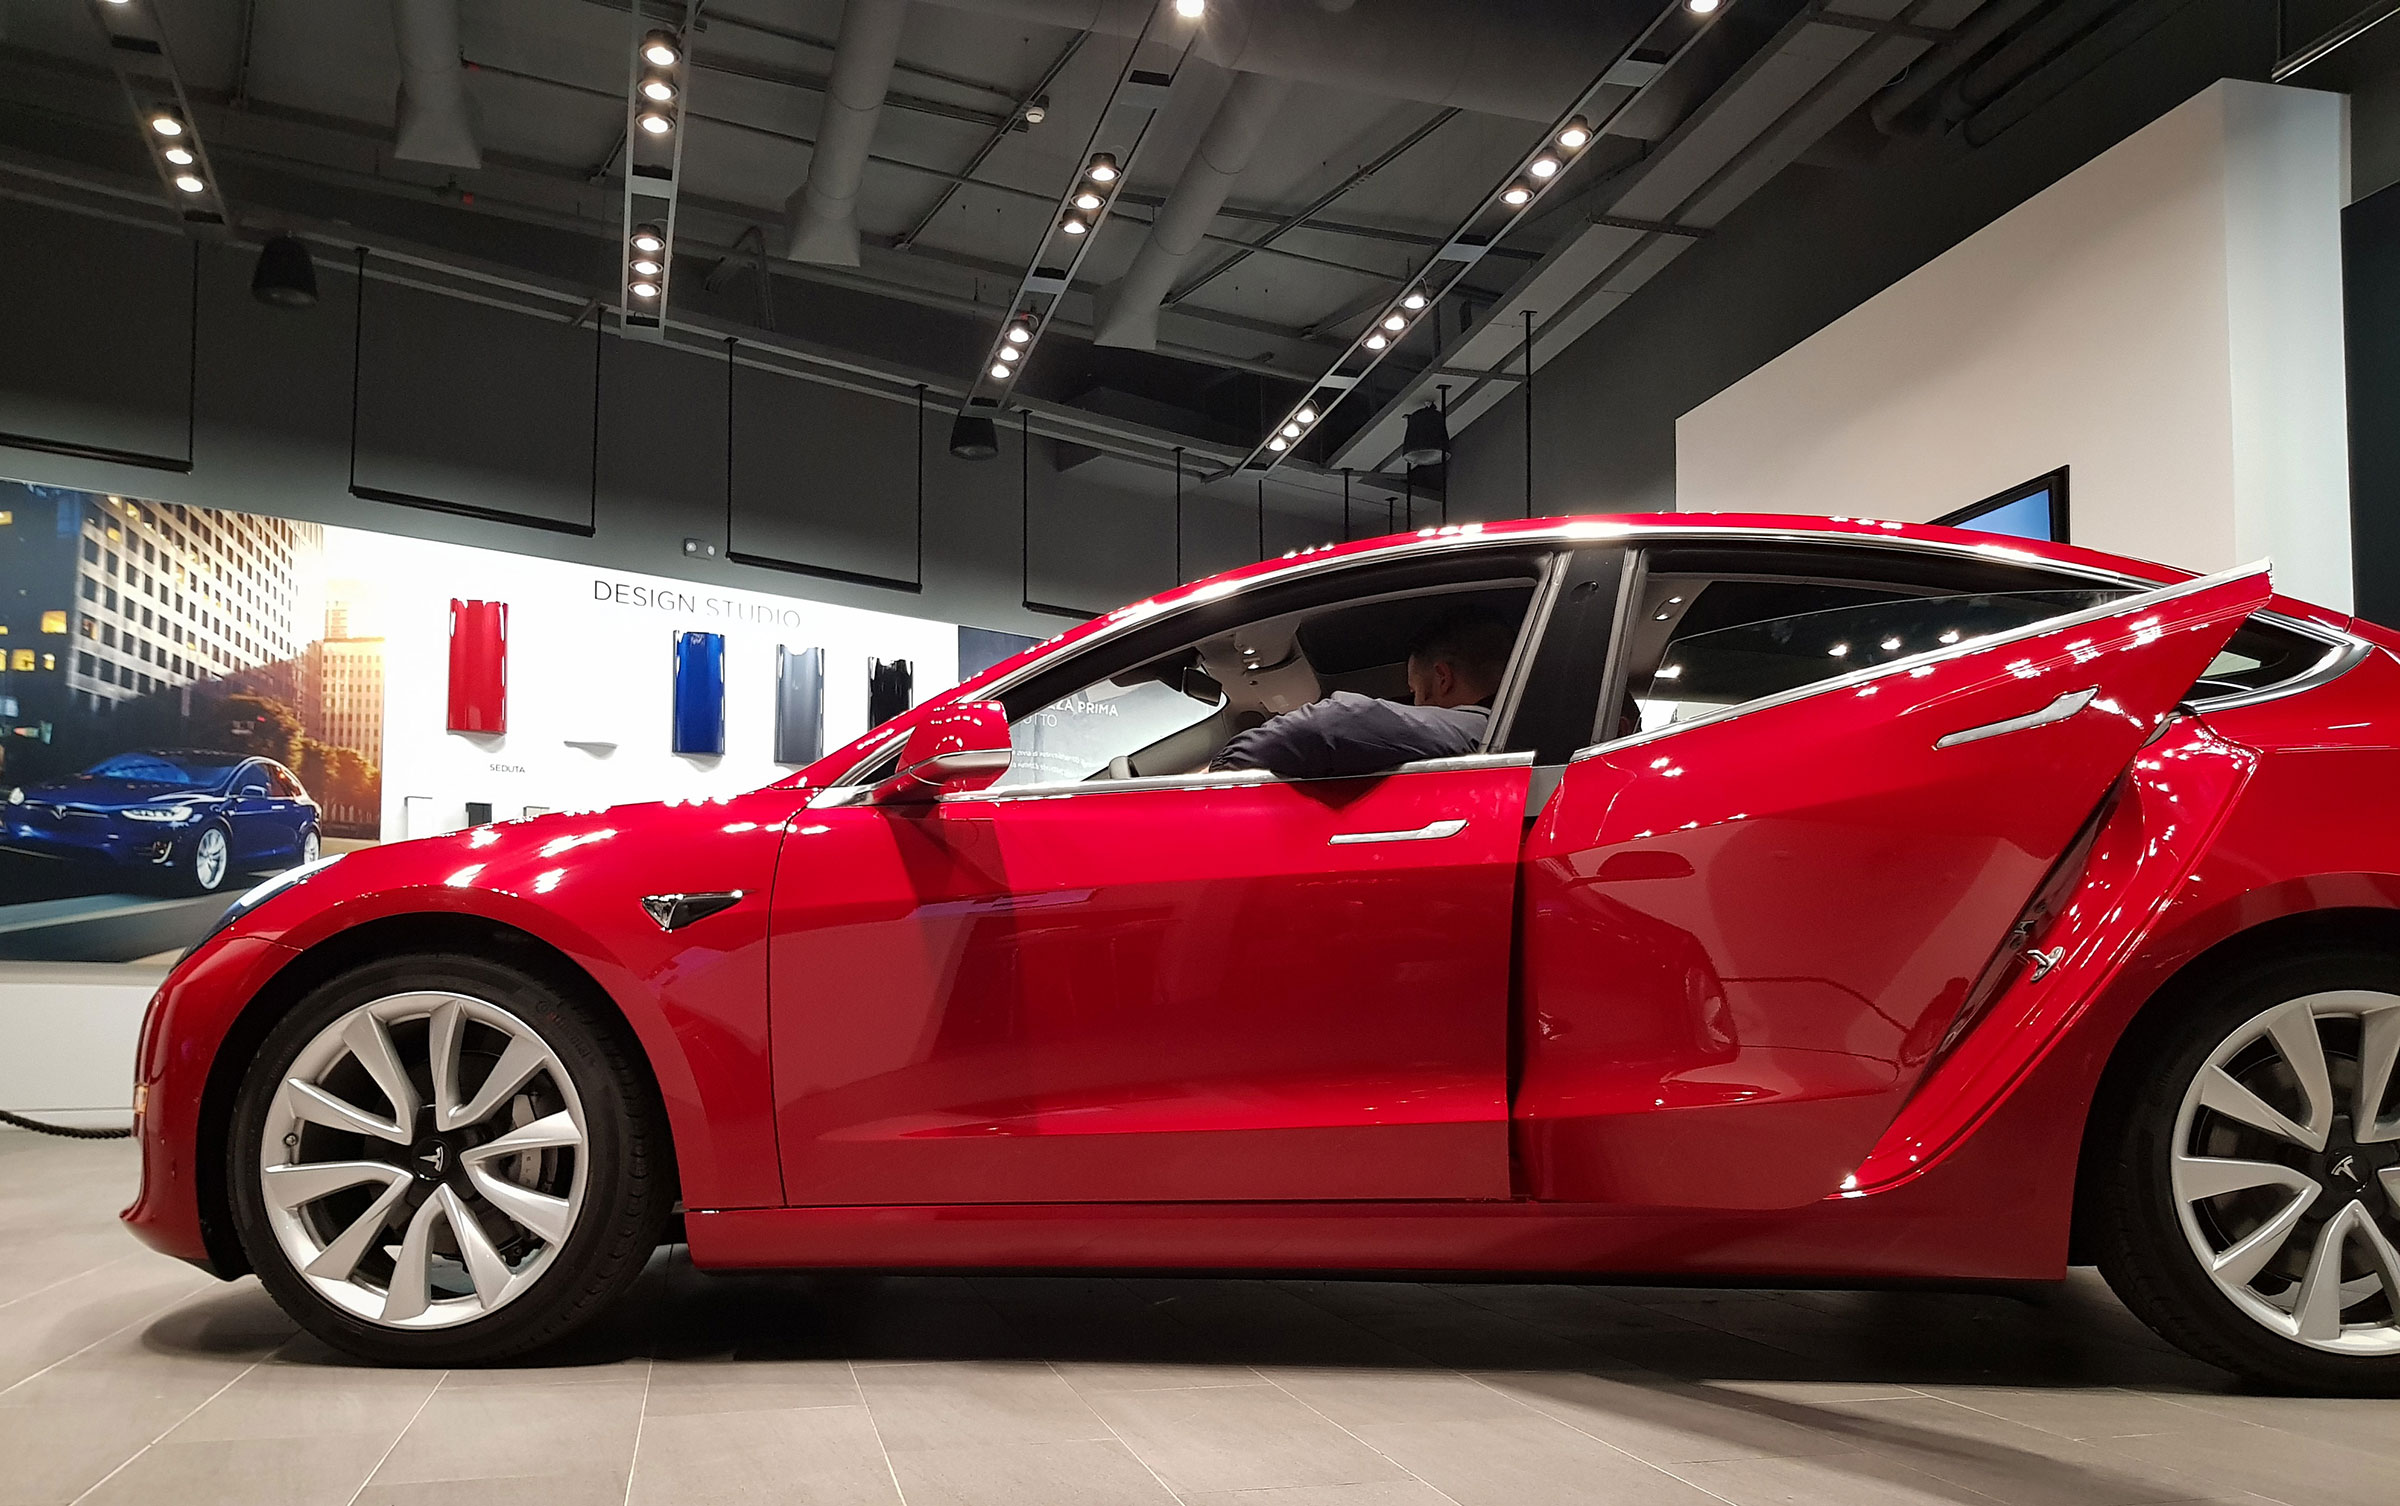 
Costo di mantenimento: Tesla Model 3, costo mantenimento